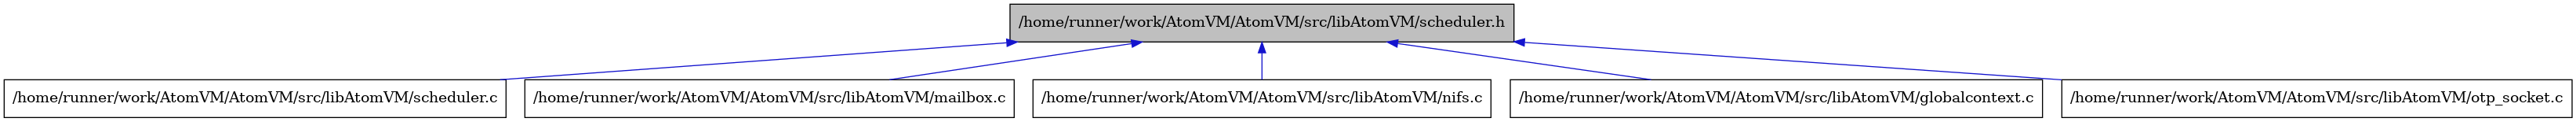 digraph {
    graph [bgcolor="#00000000"]
    node [shape=rectangle style=filled fillcolor="#FFFFFF" font=Helvetica padding=2]
    edge [color="#1414CE"]
    "6" [label="/home/runner/work/AtomVM/AtomVM/src/libAtomVM/scheduler.c" tooltip="/home/runner/work/AtomVM/AtomVM/src/libAtomVM/scheduler.c"]
    "1" [label="/home/runner/work/AtomVM/AtomVM/src/libAtomVM/scheduler.h" tooltip="/home/runner/work/AtomVM/AtomVM/src/libAtomVM/scheduler.h" fillcolor="#BFBFBF"]
    "3" [label="/home/runner/work/AtomVM/AtomVM/src/libAtomVM/mailbox.c" tooltip="/home/runner/work/AtomVM/AtomVM/src/libAtomVM/mailbox.c"]
    "4" [label="/home/runner/work/AtomVM/AtomVM/src/libAtomVM/nifs.c" tooltip="/home/runner/work/AtomVM/AtomVM/src/libAtomVM/nifs.c"]
    "2" [label="/home/runner/work/AtomVM/AtomVM/src/libAtomVM/globalcontext.c" tooltip="/home/runner/work/AtomVM/AtomVM/src/libAtomVM/globalcontext.c"]
    "5" [label="/home/runner/work/AtomVM/AtomVM/src/libAtomVM/otp_socket.c" tooltip="/home/runner/work/AtomVM/AtomVM/src/libAtomVM/otp_socket.c"]
    "1" -> "2" [dir=back tooltip="include"]
    "1" -> "3" [dir=back tooltip="include"]
    "1" -> "4" [dir=back tooltip="include"]
    "1" -> "5" [dir=back tooltip="include"]
    "1" -> "6" [dir=back tooltip="include"]
}